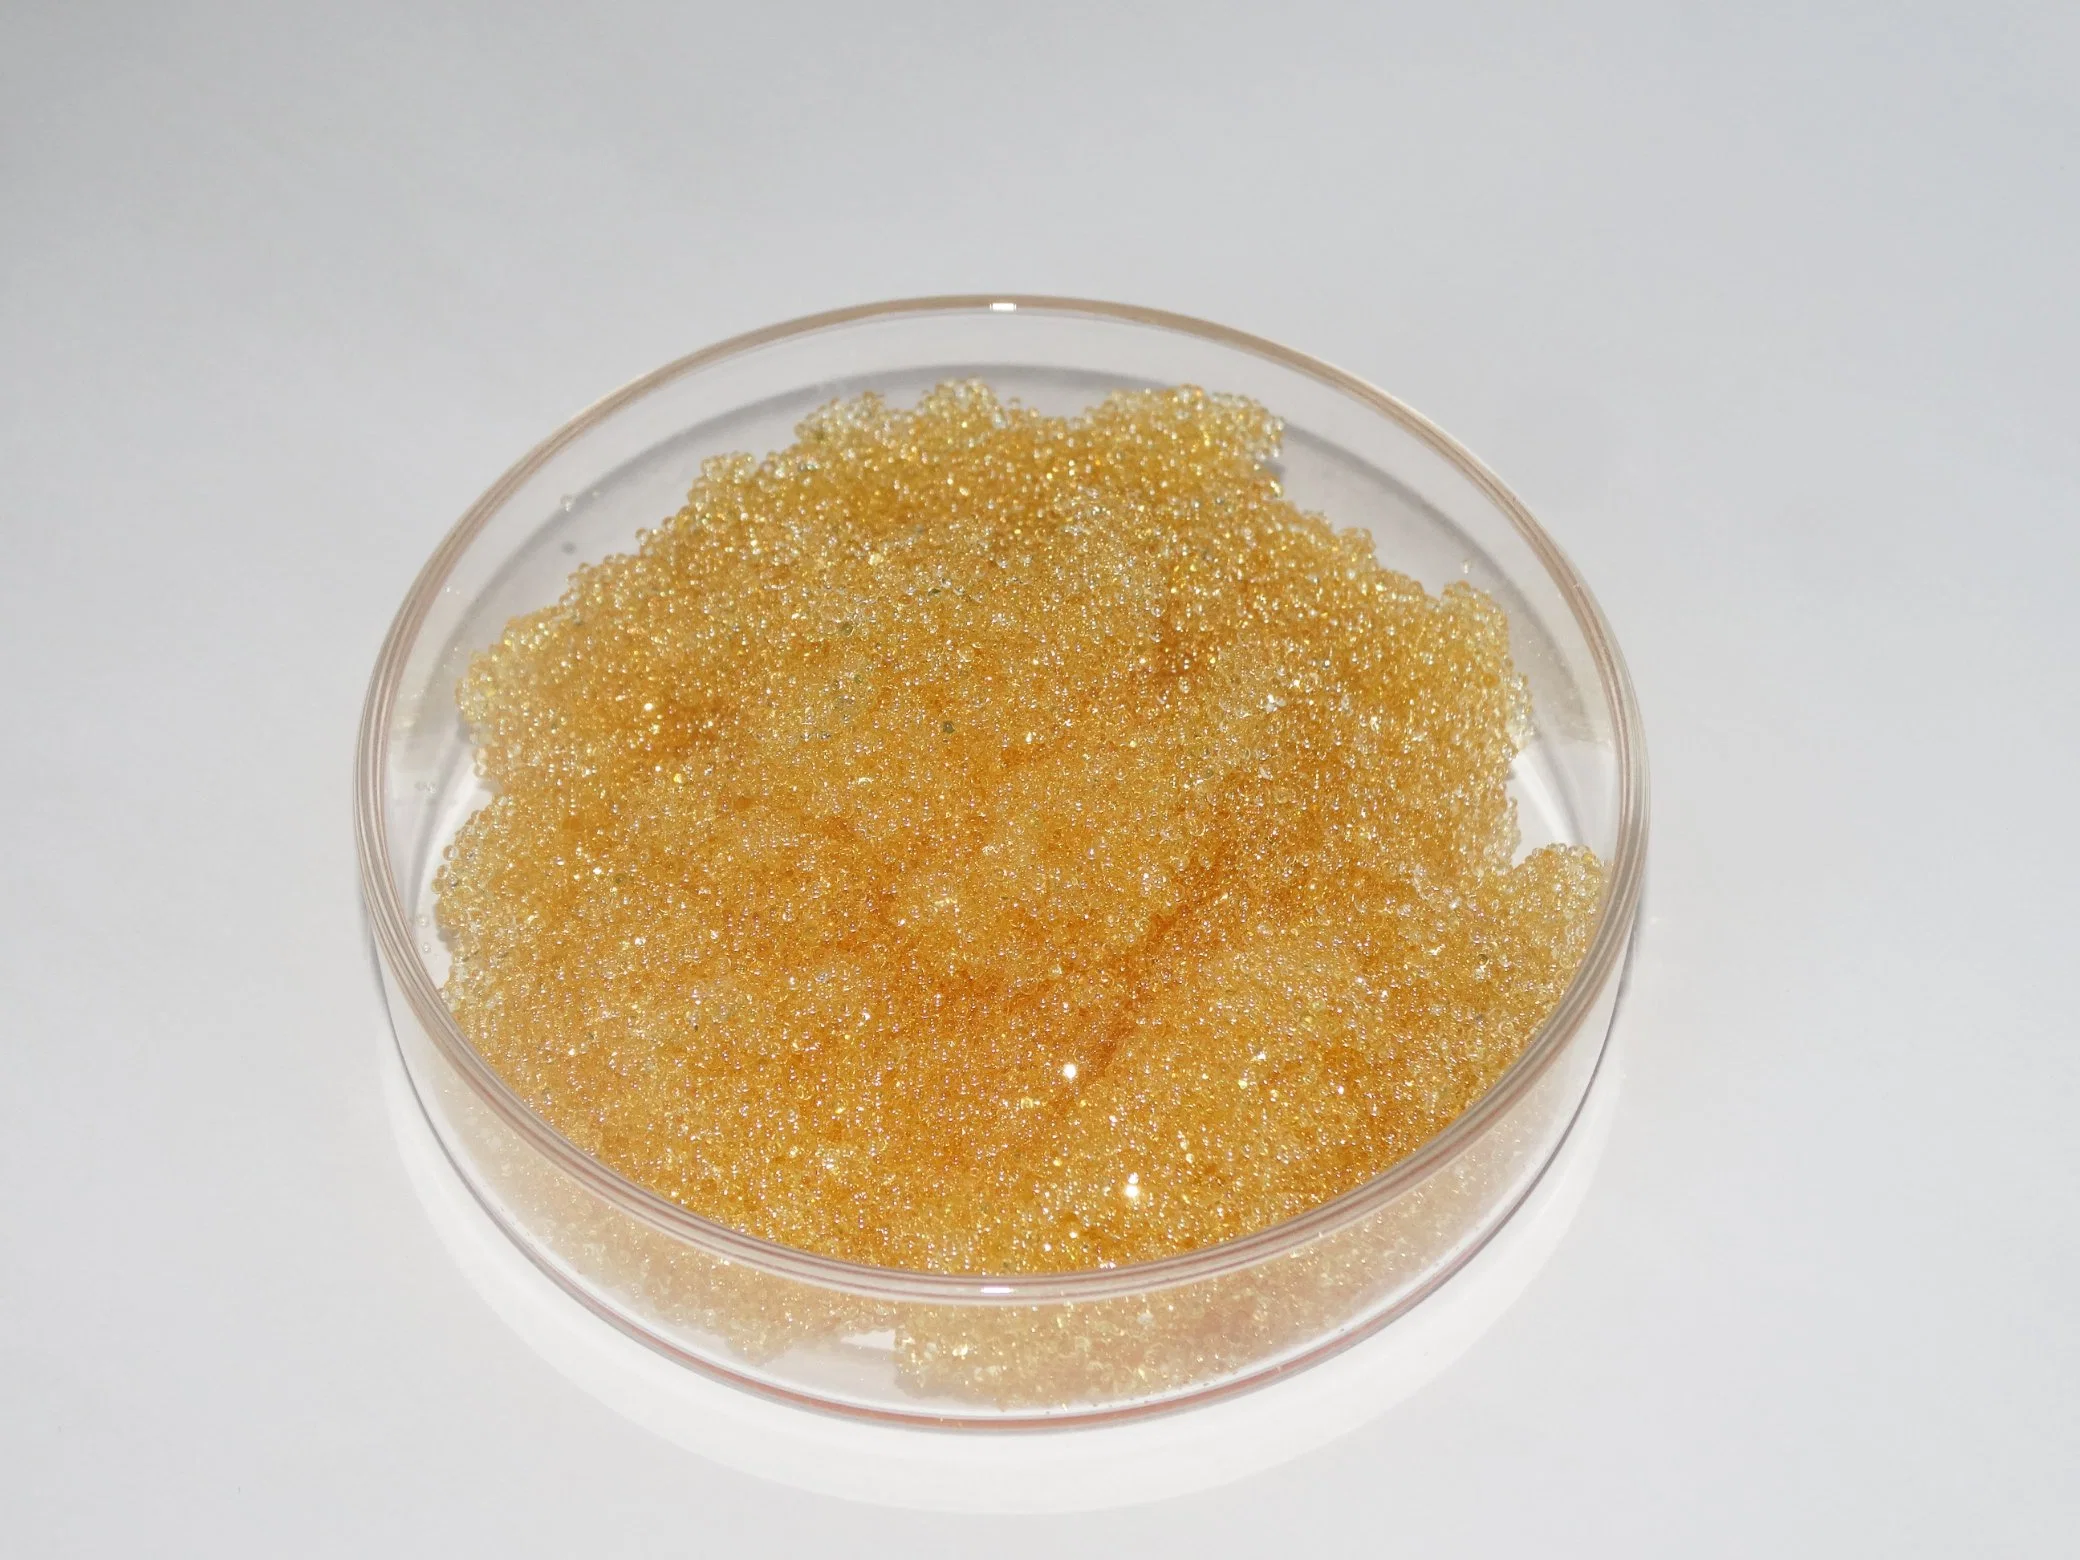 001X7 Styrene Series Gel Strong Acid Cation Exchange Resin for Water Softening